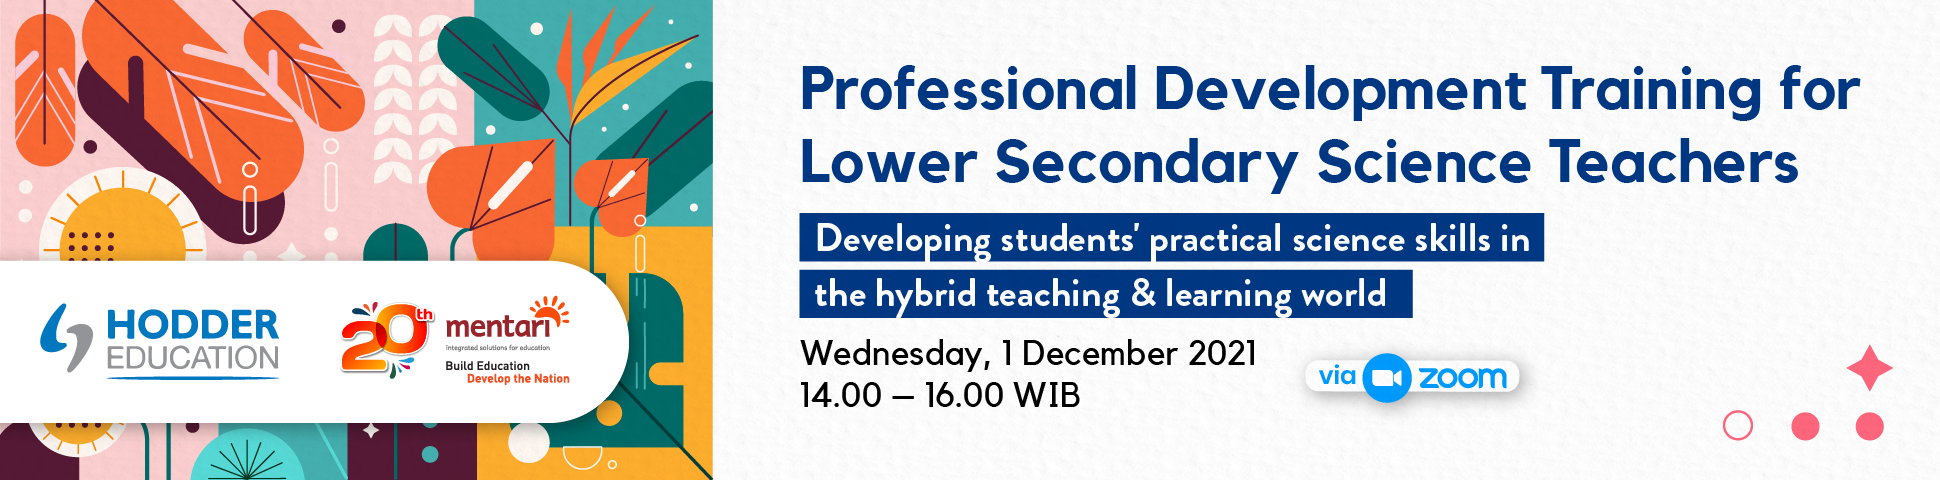 Professional Development Training for Lower Secondary Science Teachers